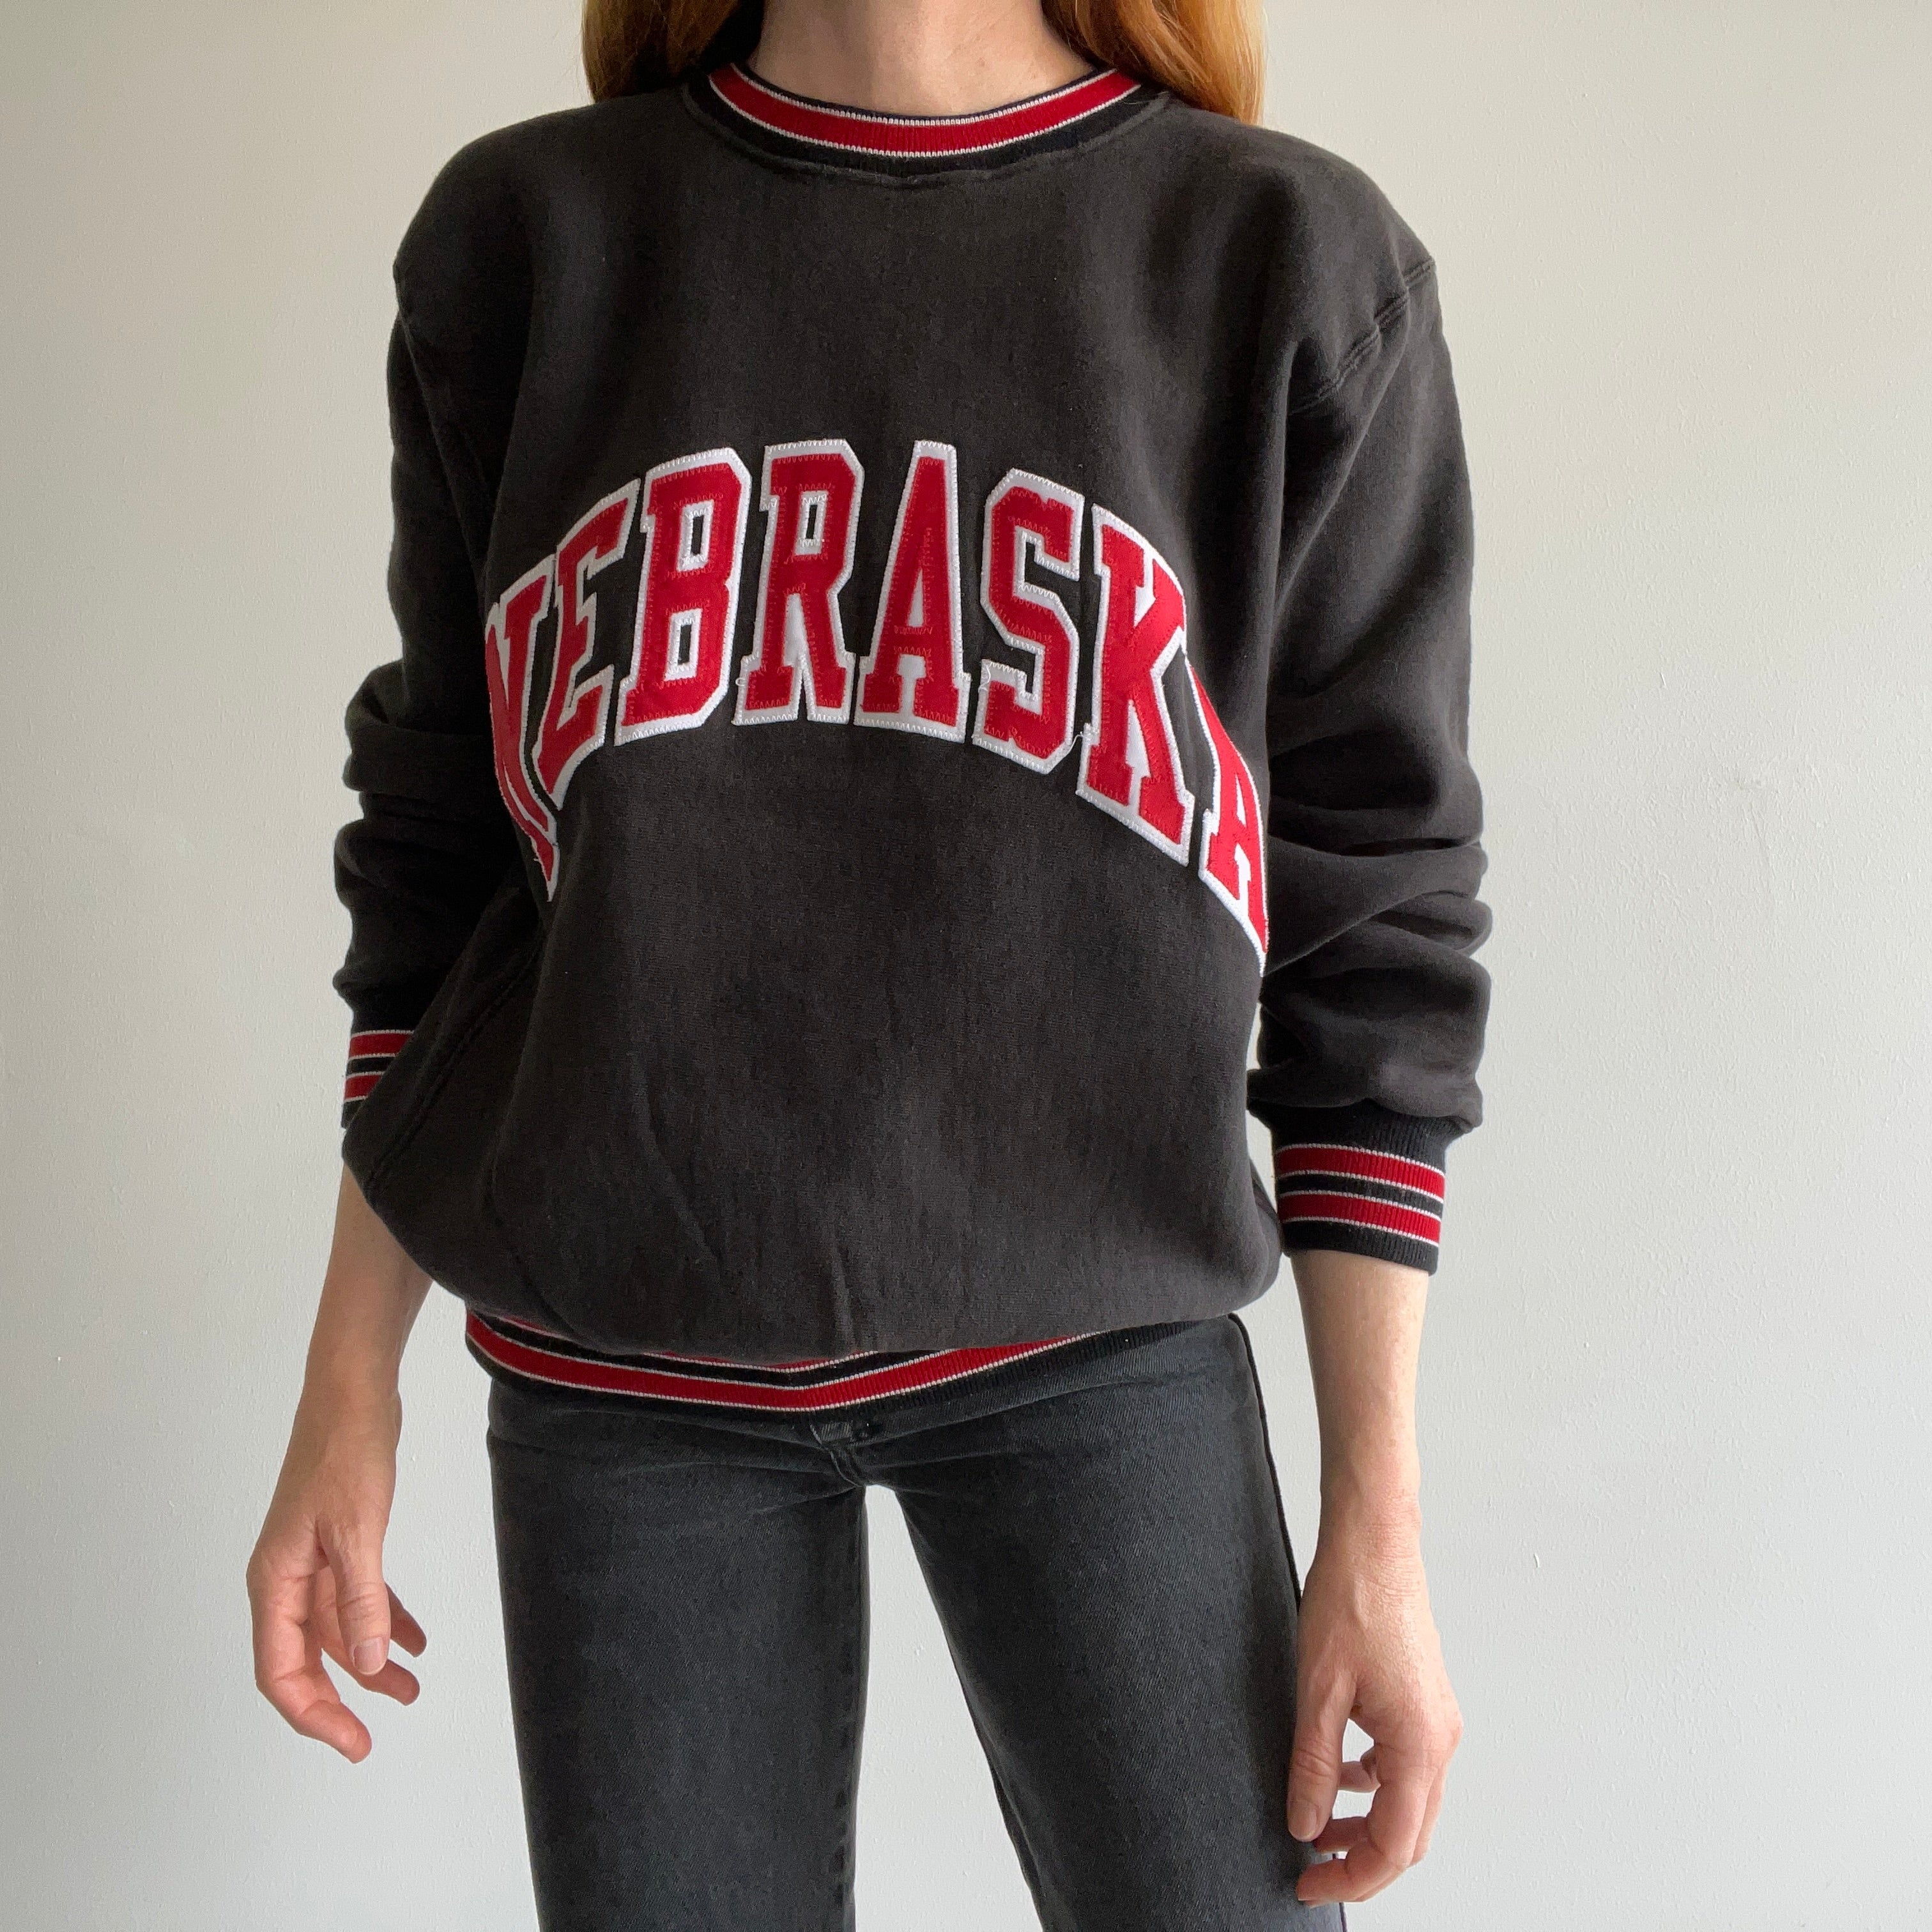 1980s Nebraska Reverse Weave Sweatshirt - Go Corn Huskers!